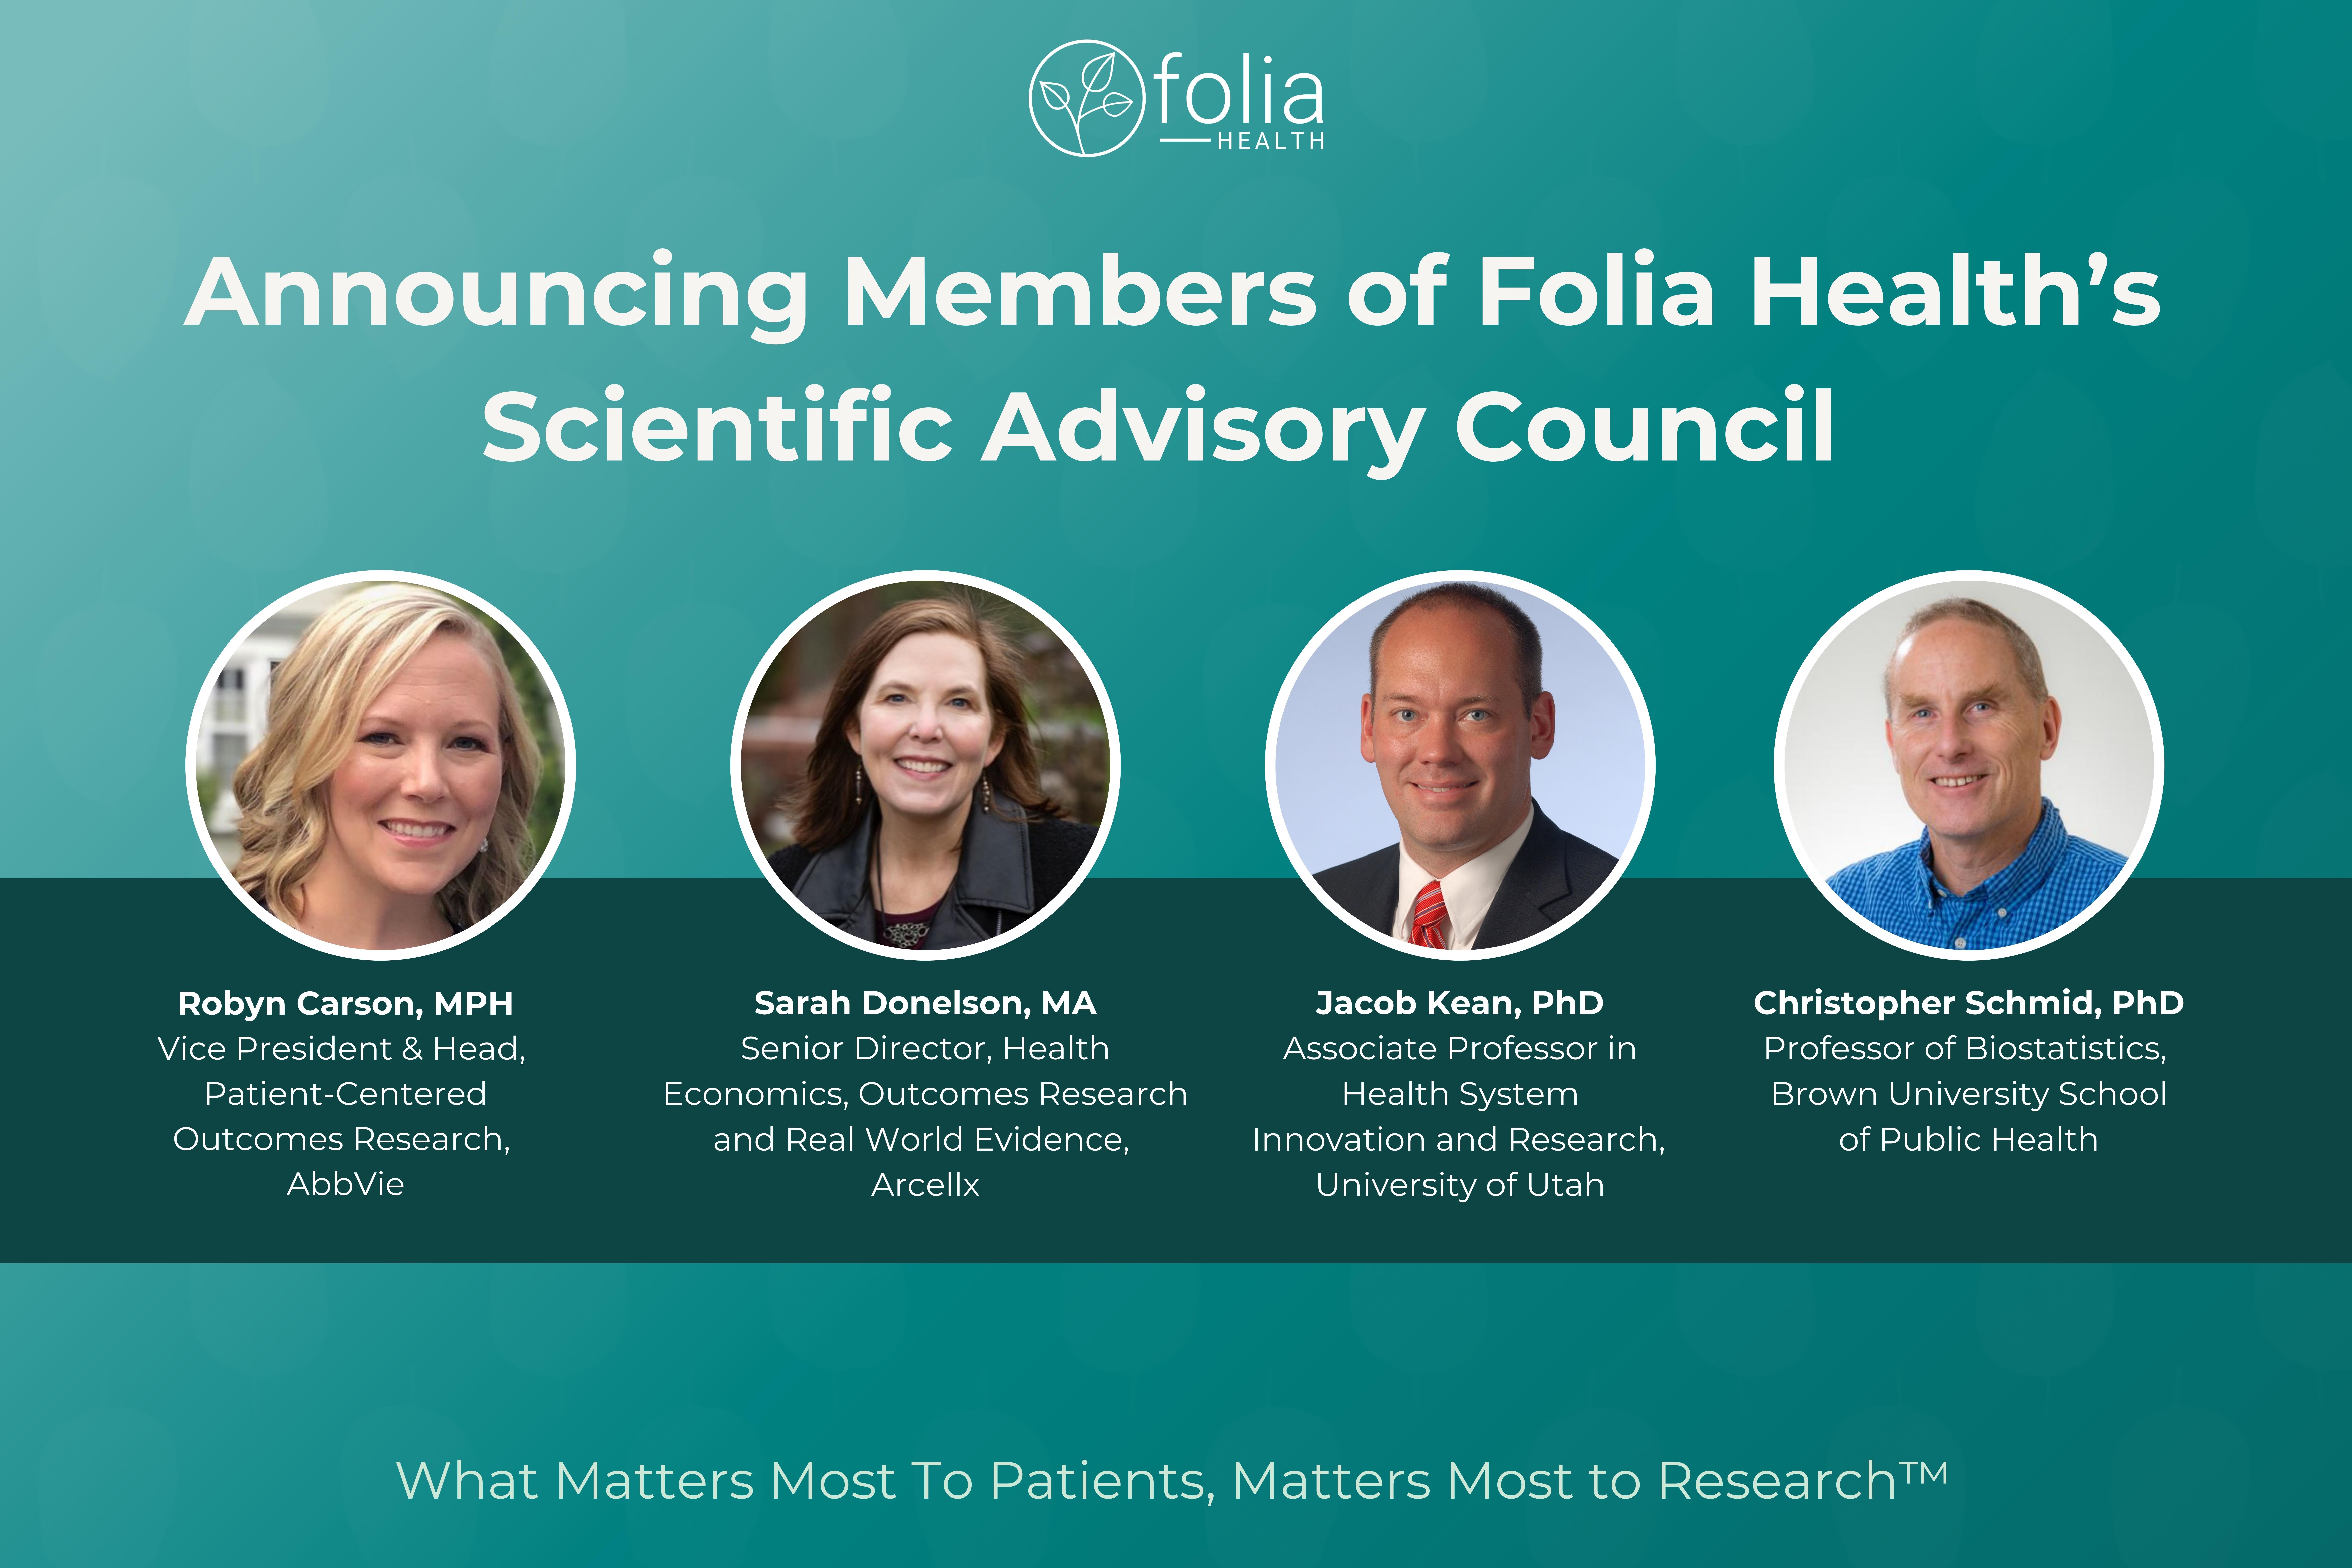 Founding Members of Folia Health's Scientific Advisory Council